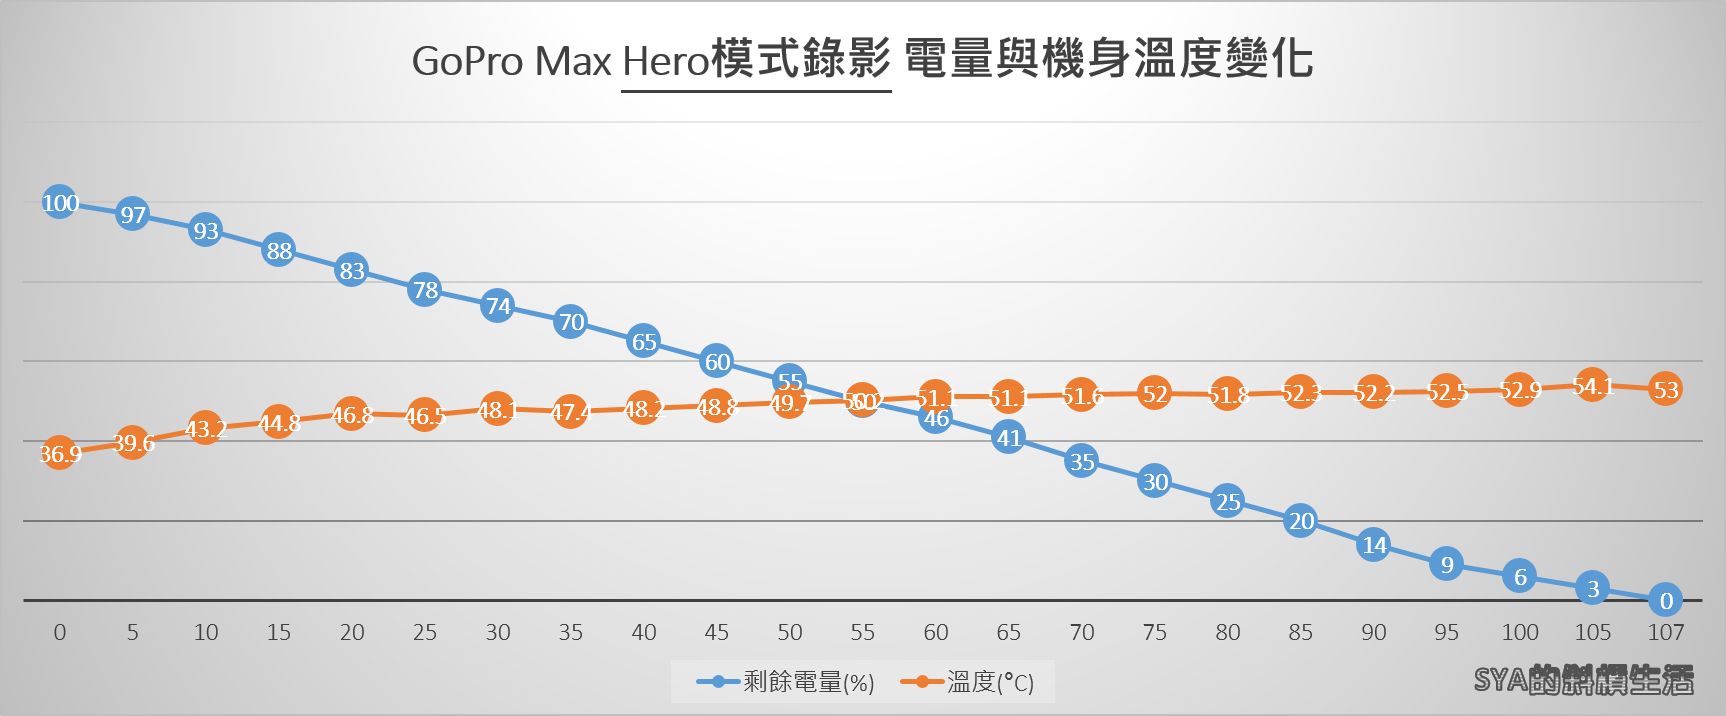 GoPro Max Hero模式耗電測試